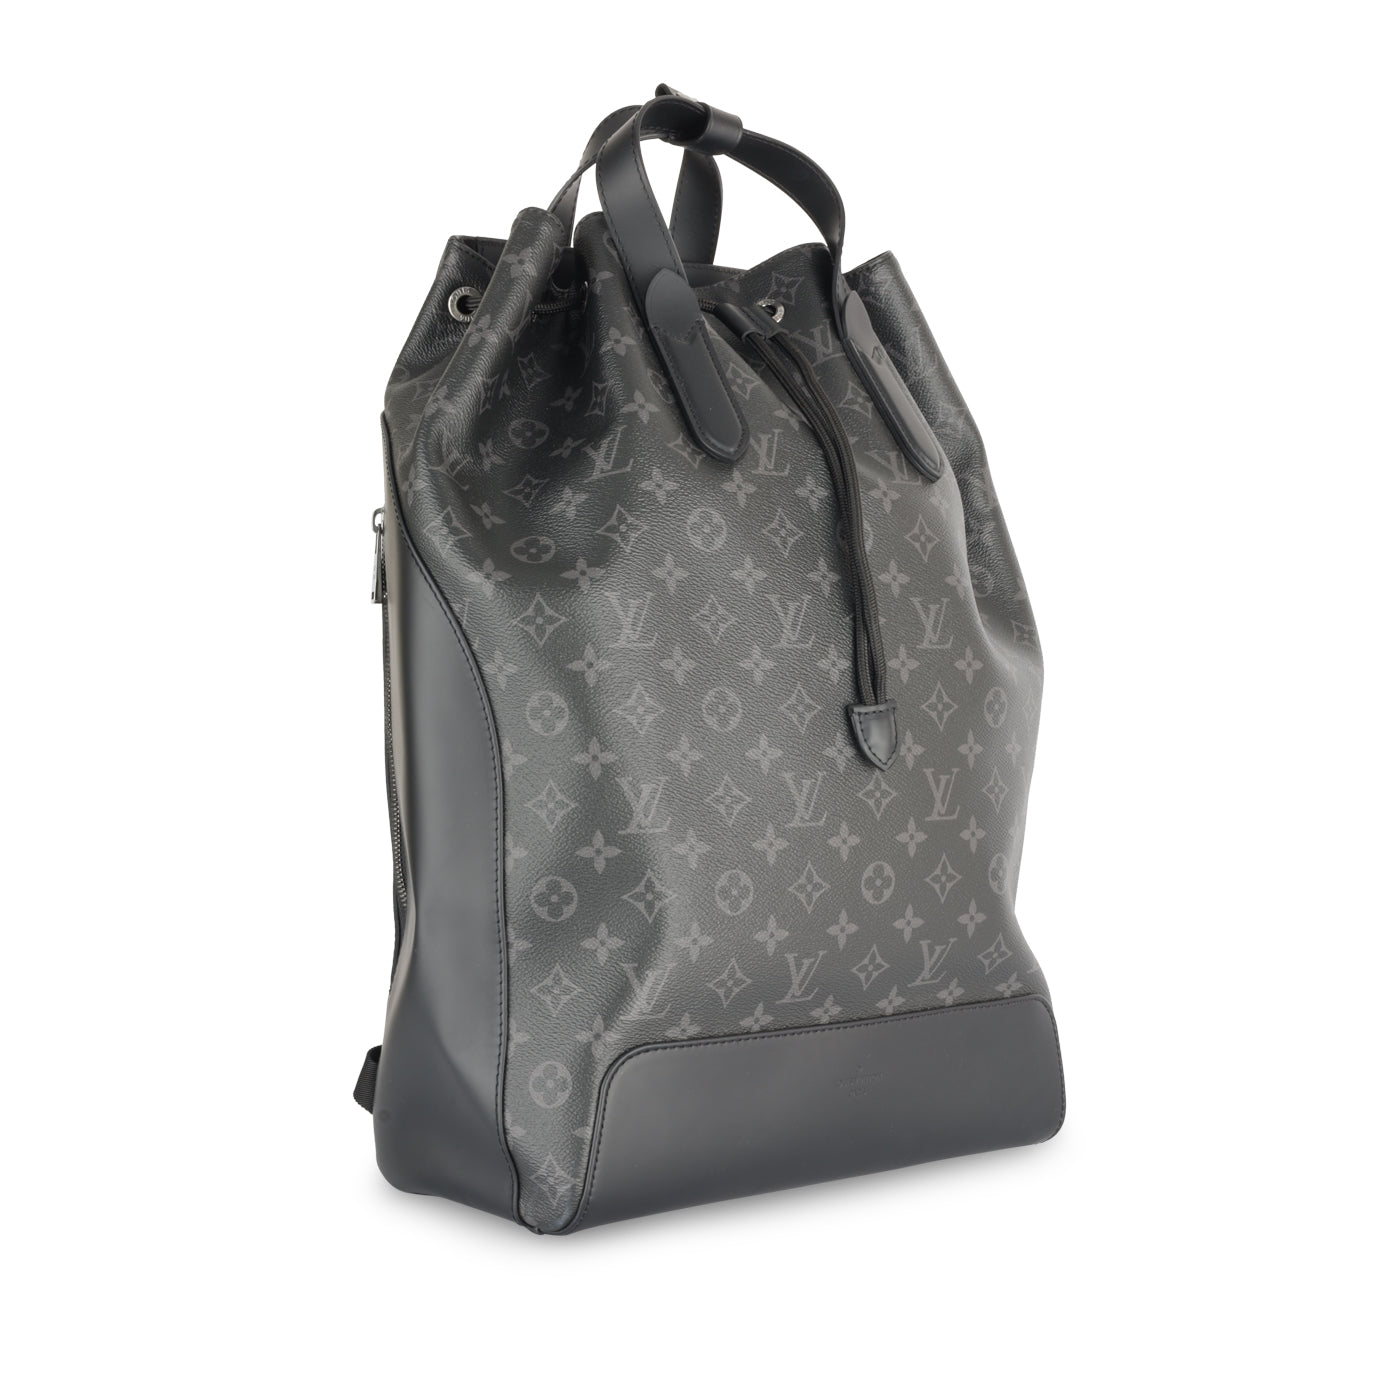 Louis Vuitton Explorer backpack 